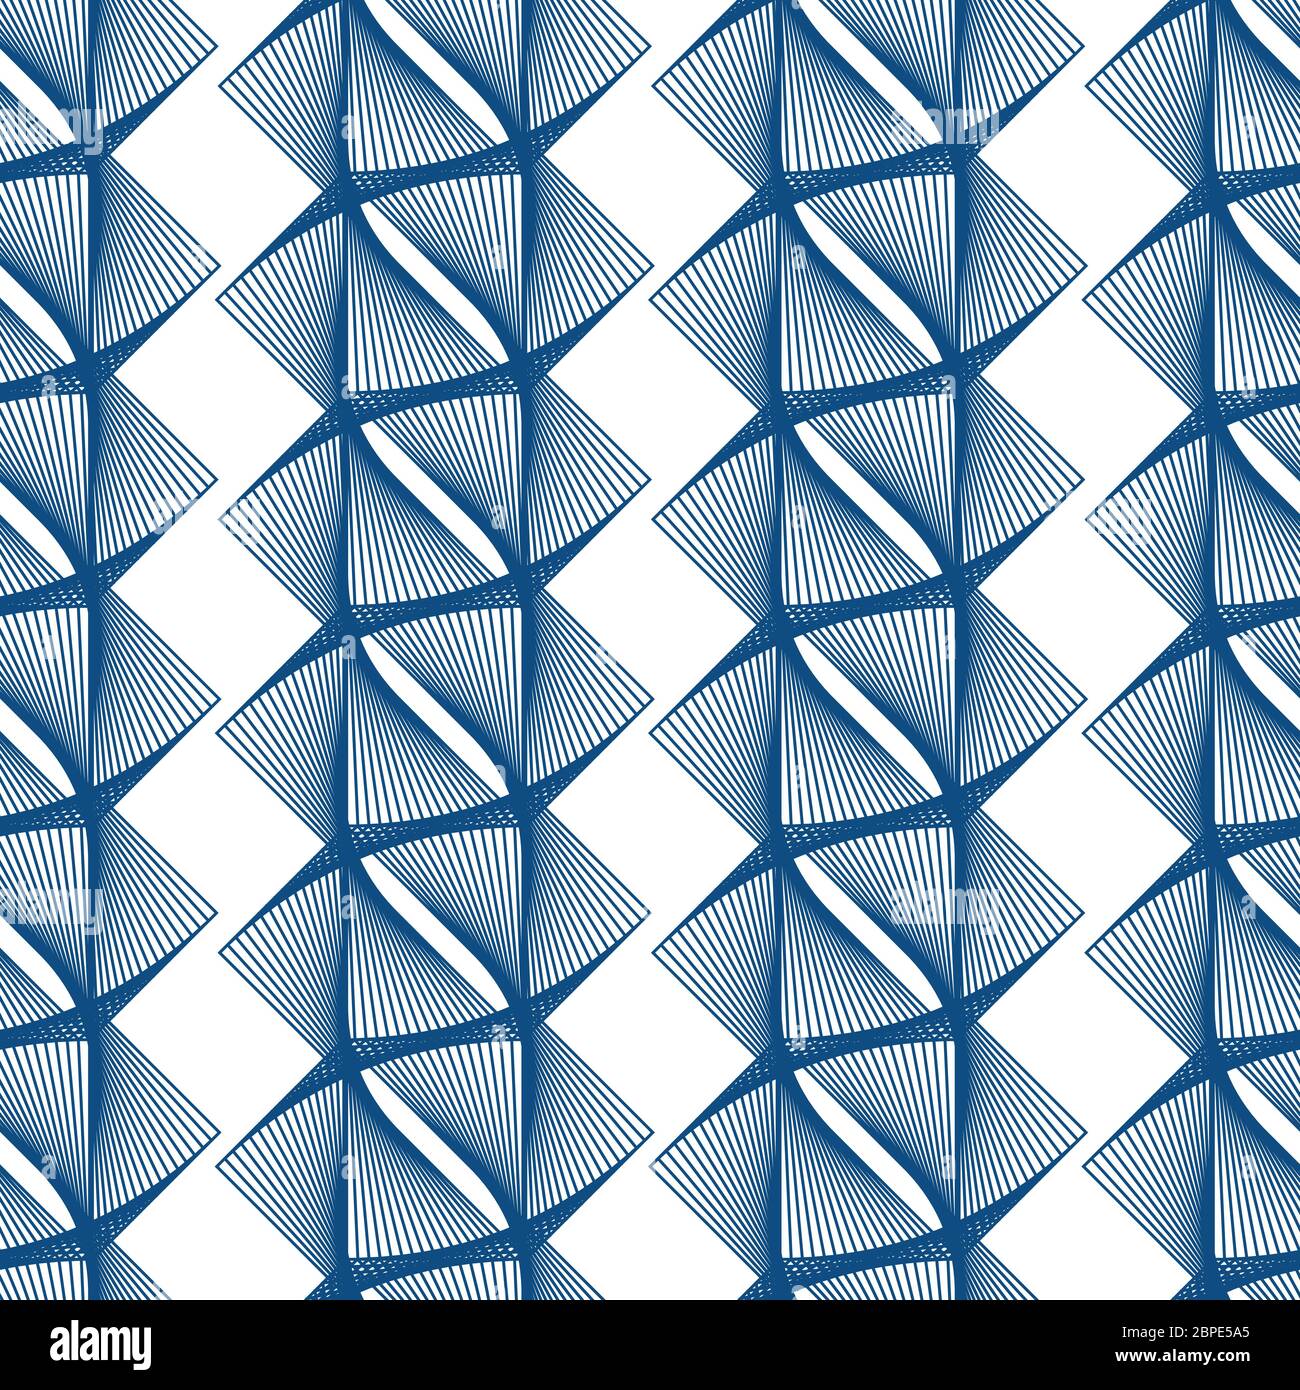 Blue Zig Zag Lines. Simple Geometric Mot Graphic by vectorbum